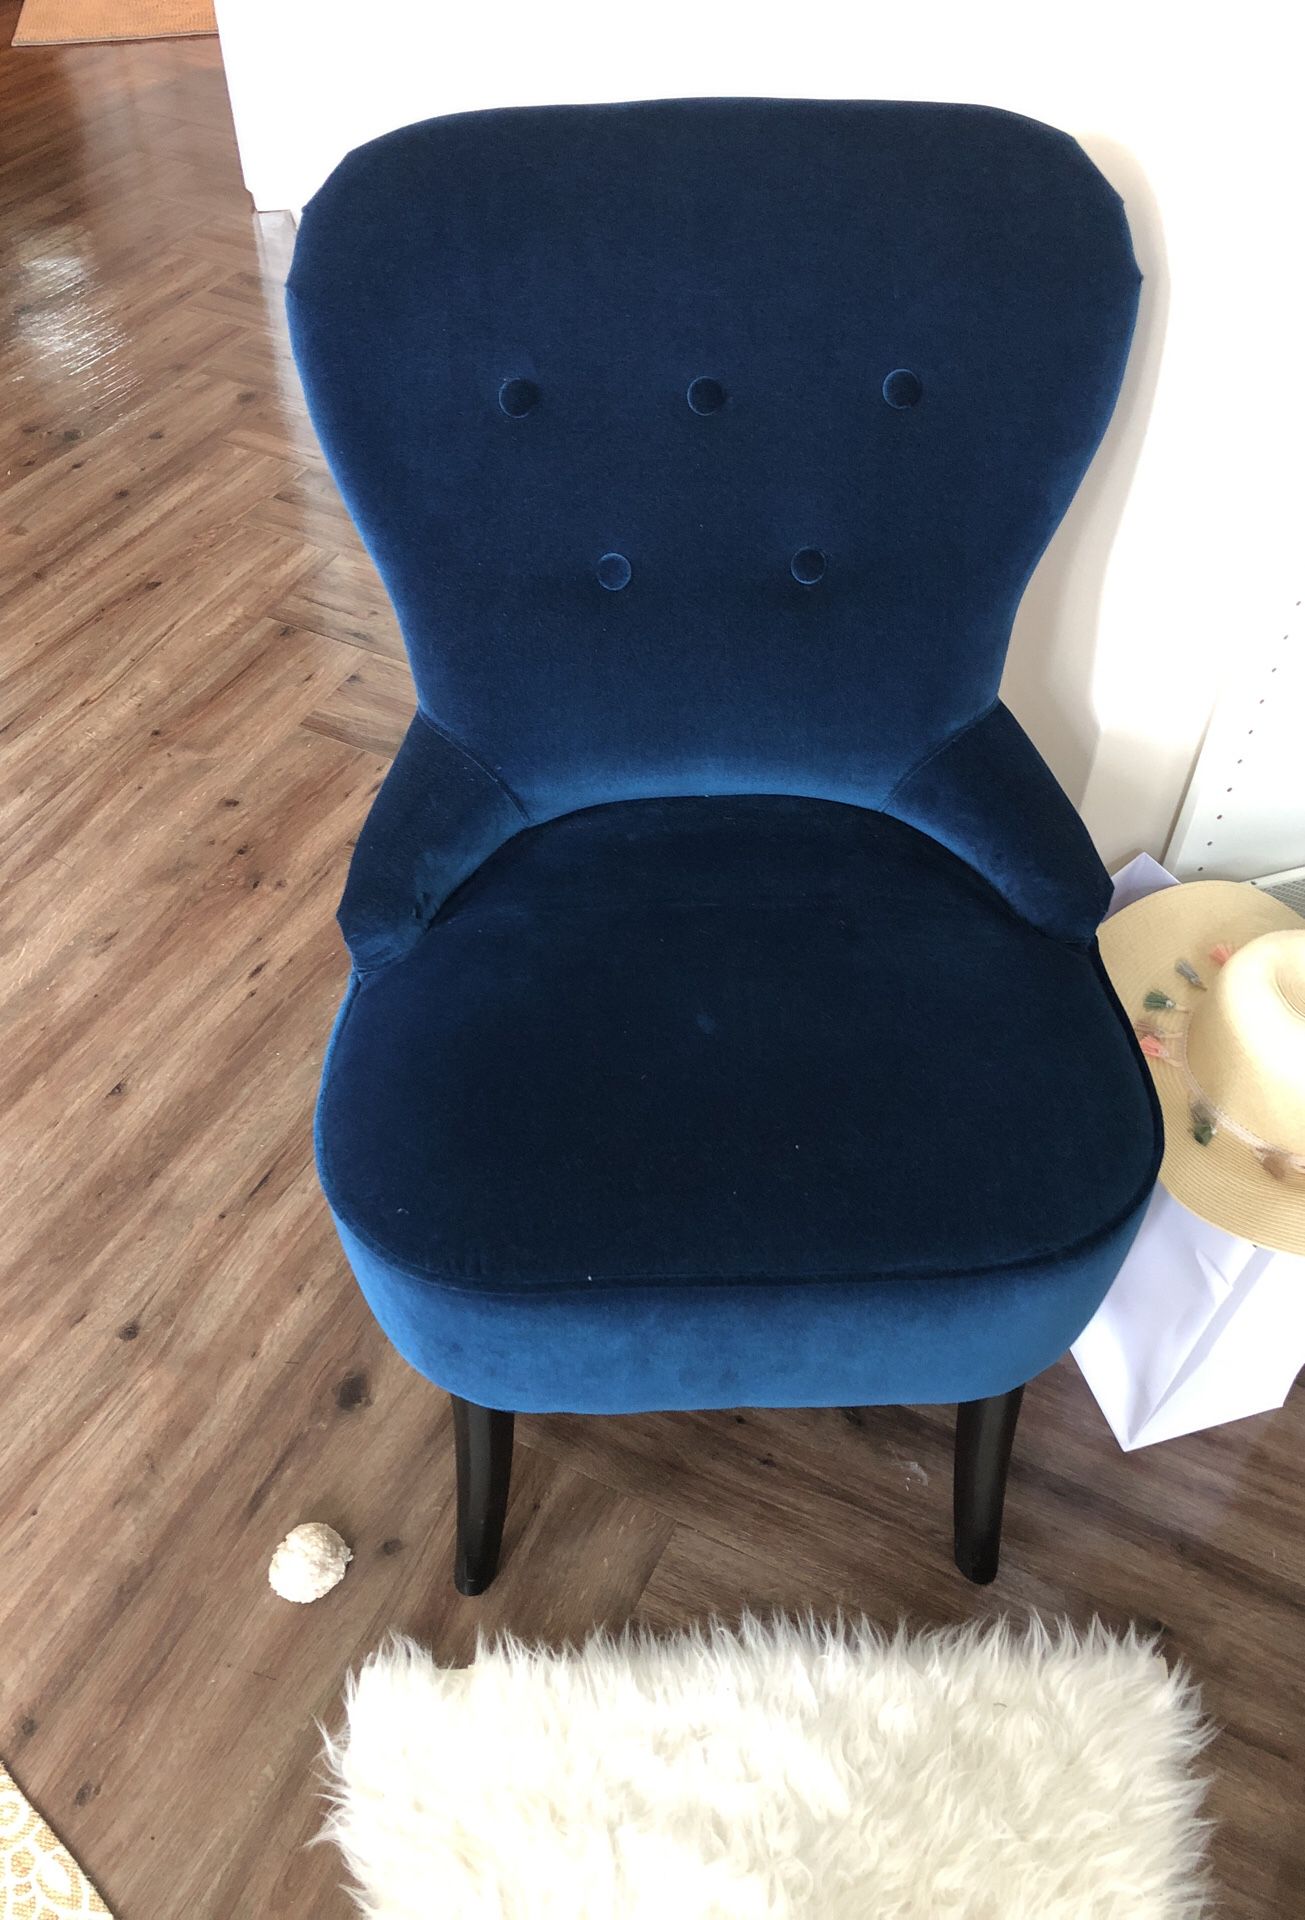 Ikea sofa chair